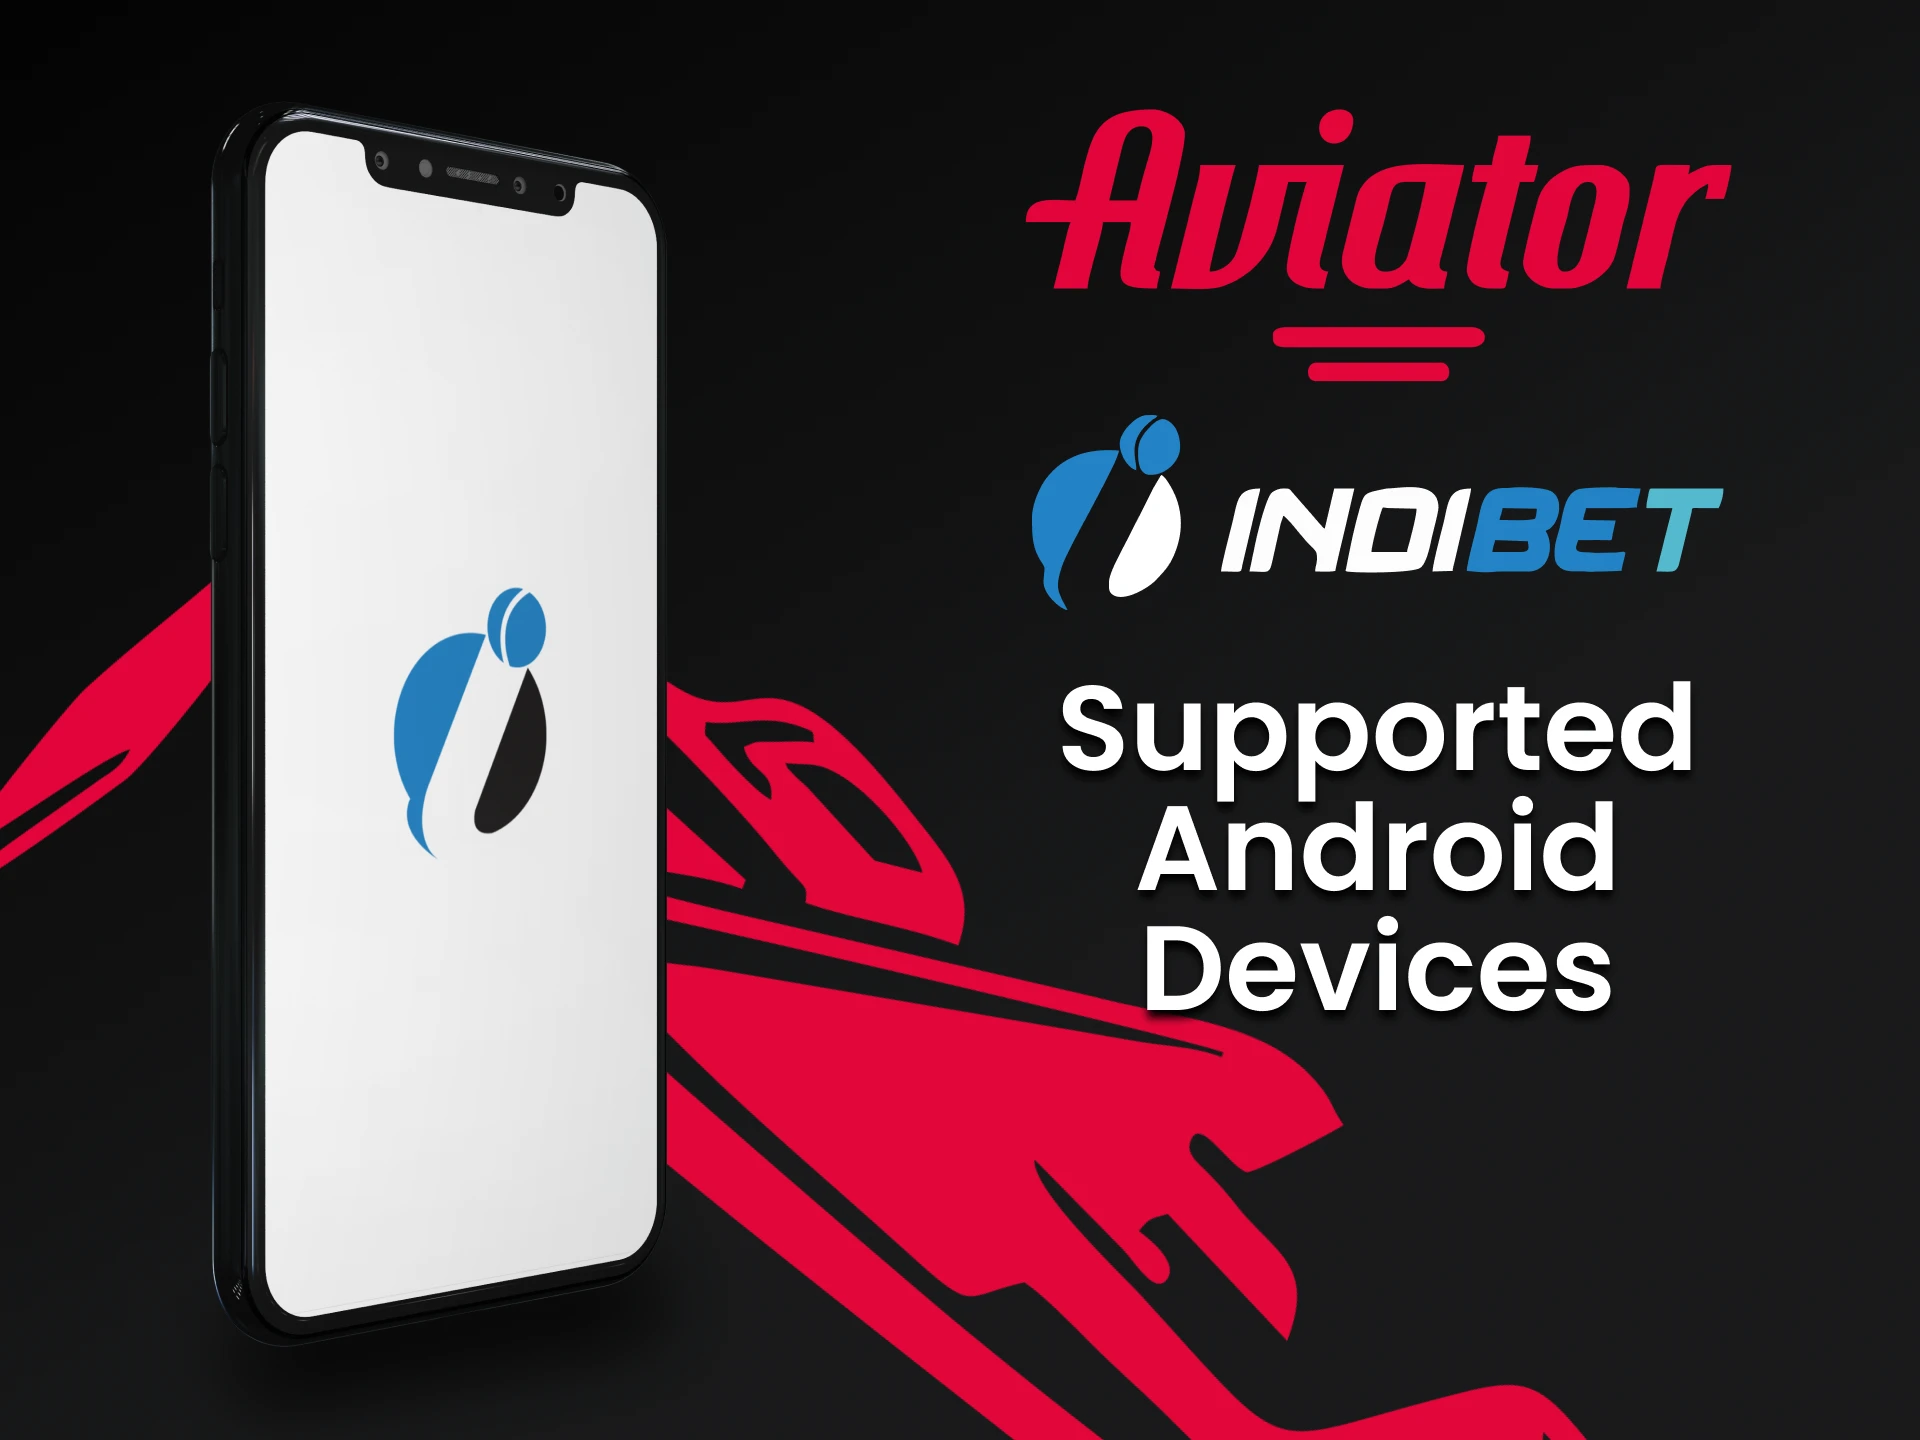 Play Aviator through the Indibet Android app.